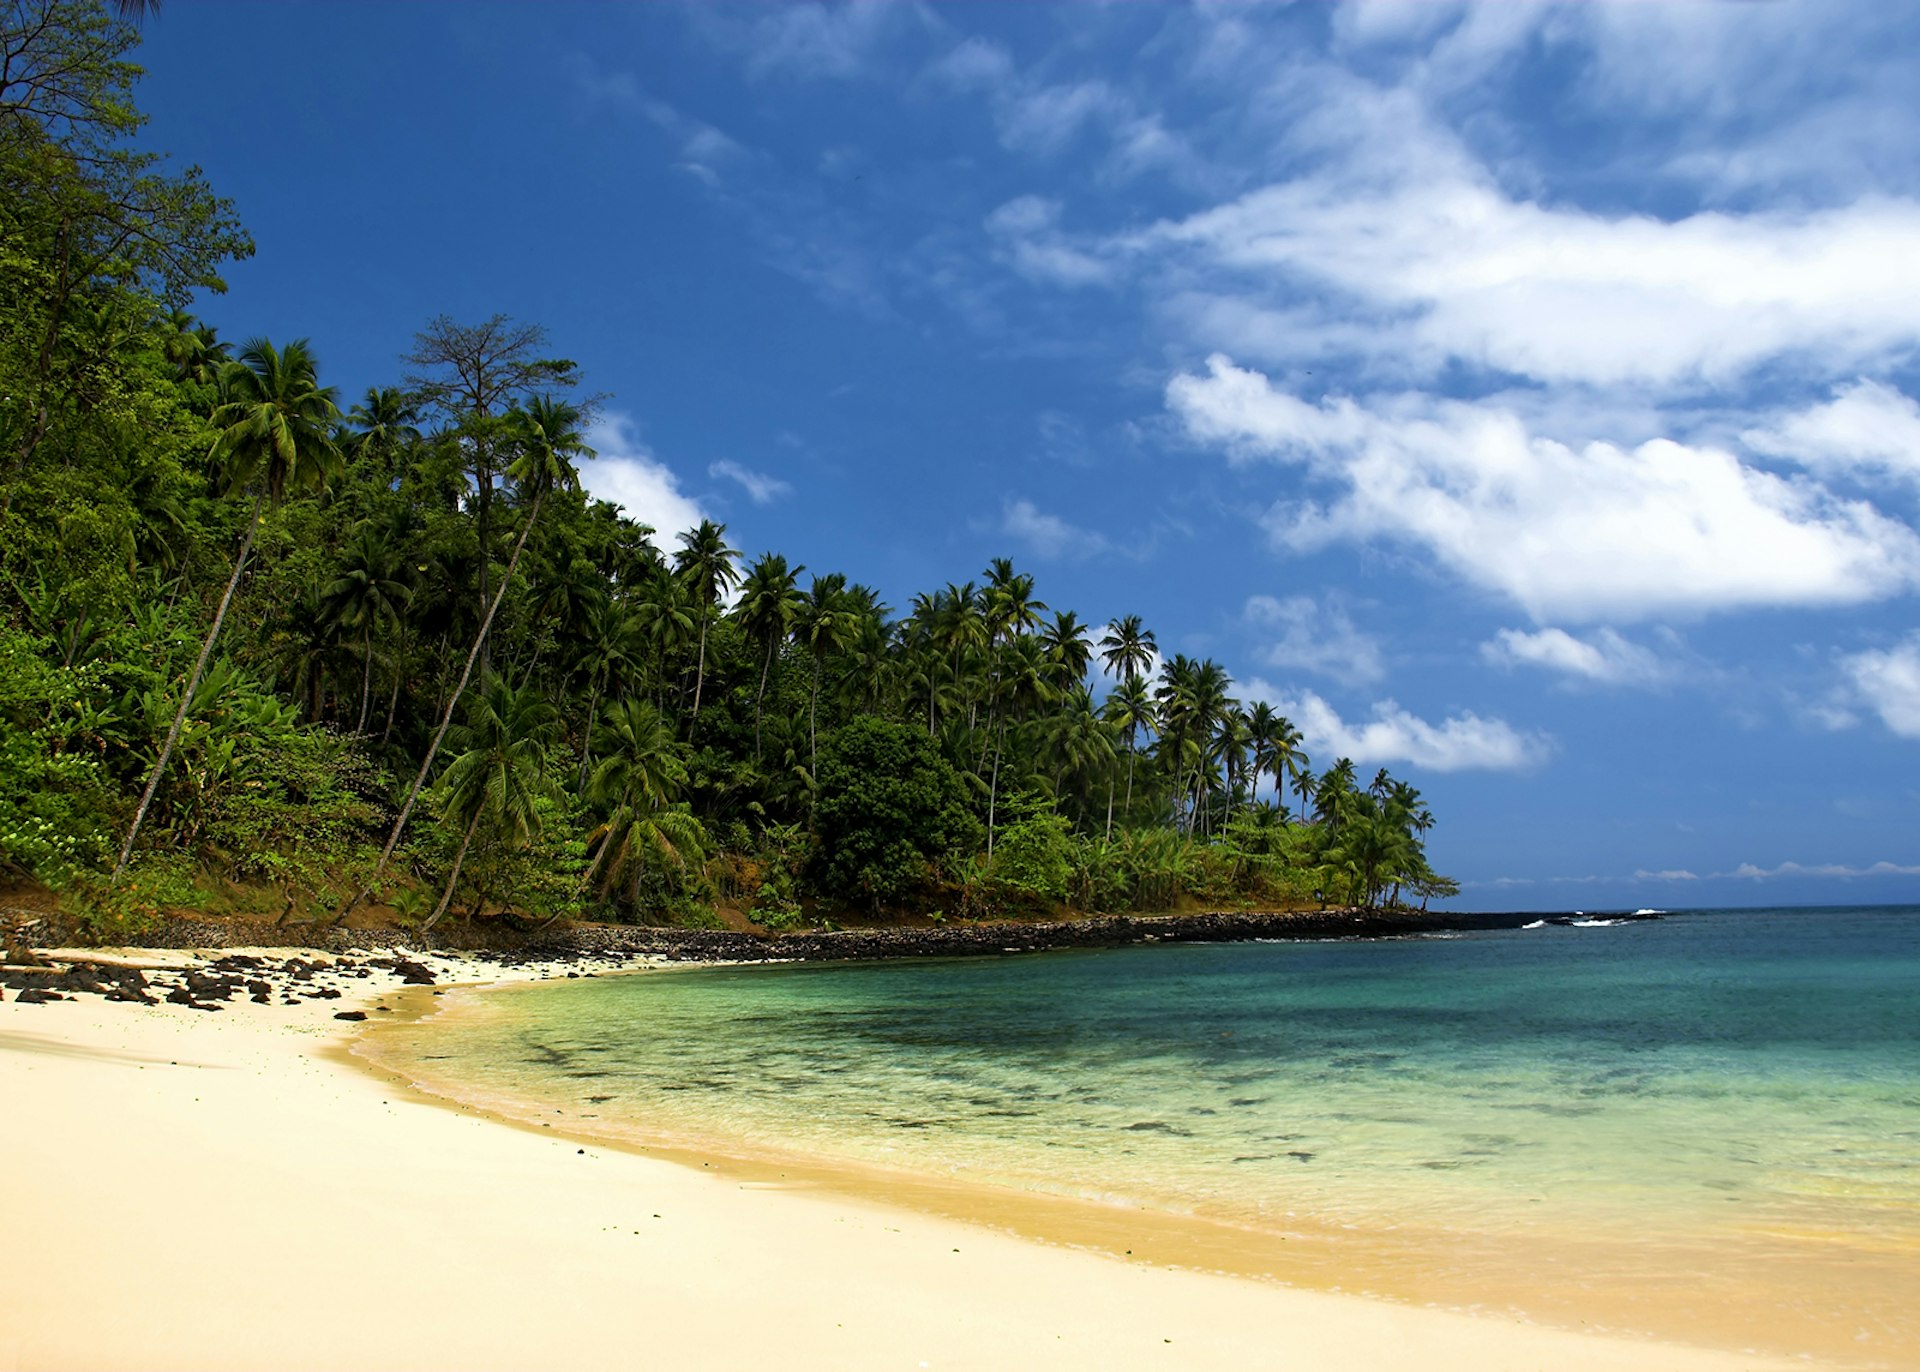 An empty beach on São Tomé © iko / Shutterstock